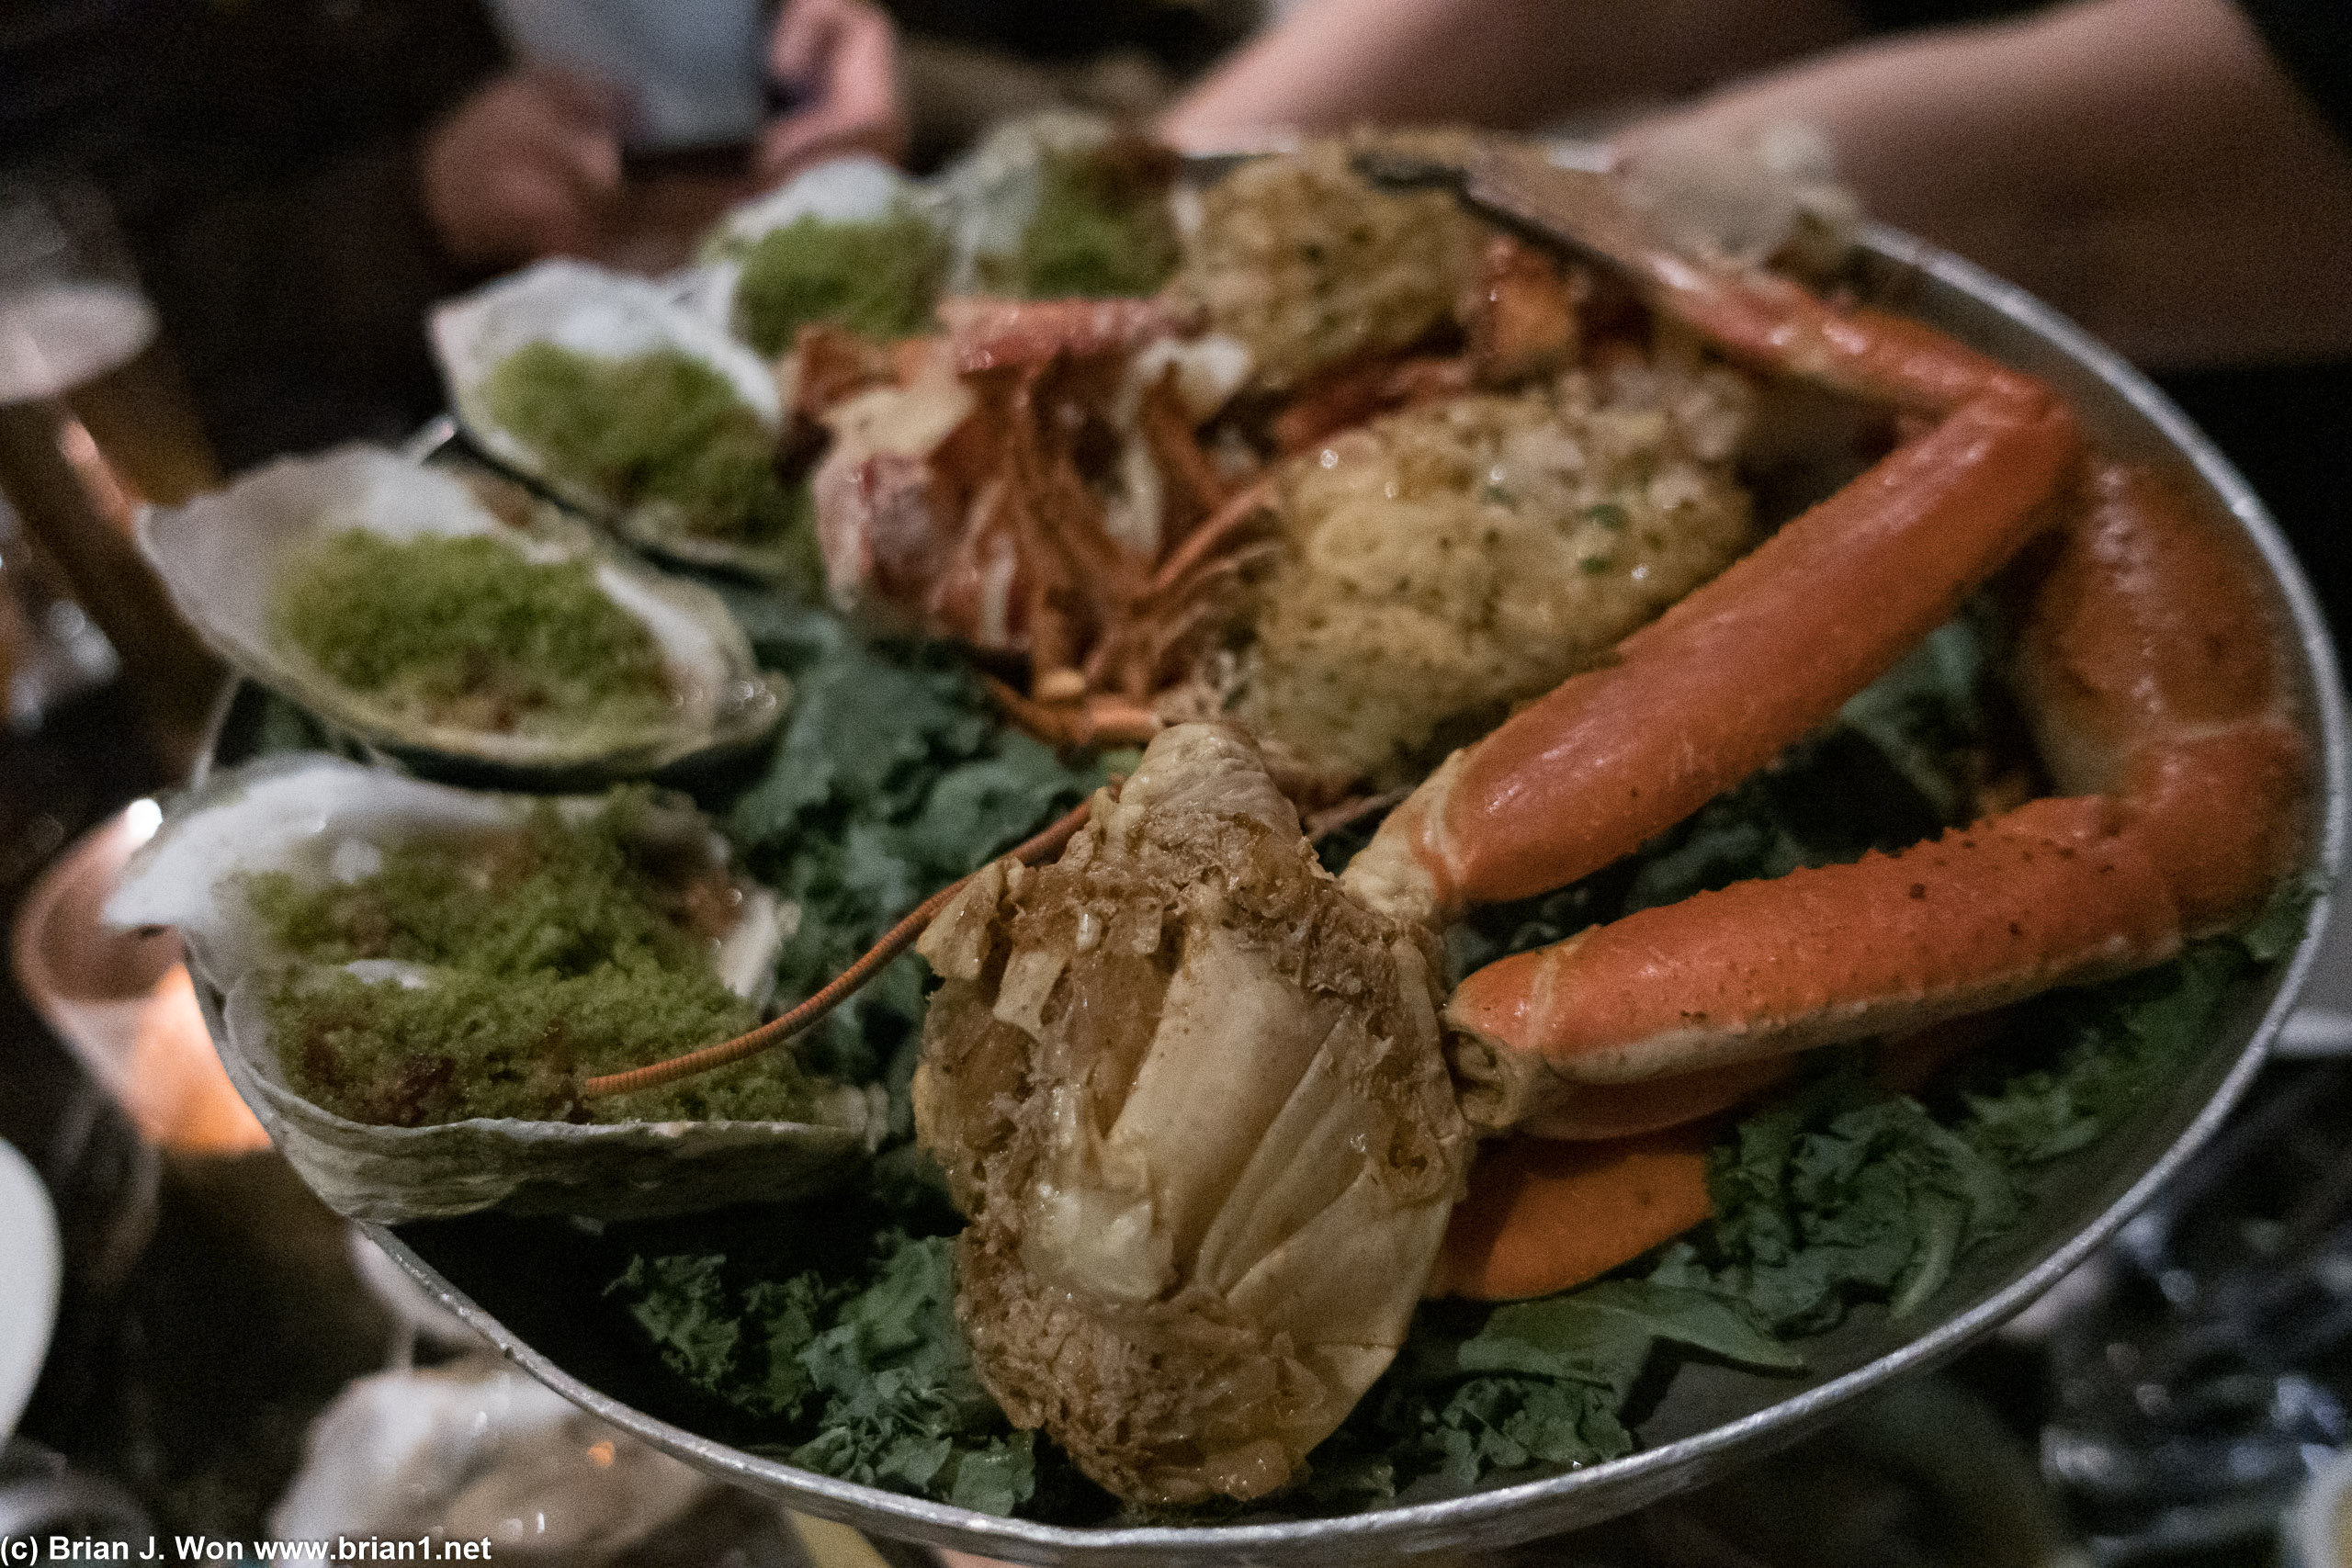 Lobster, oysters rockefeller, crab legs.